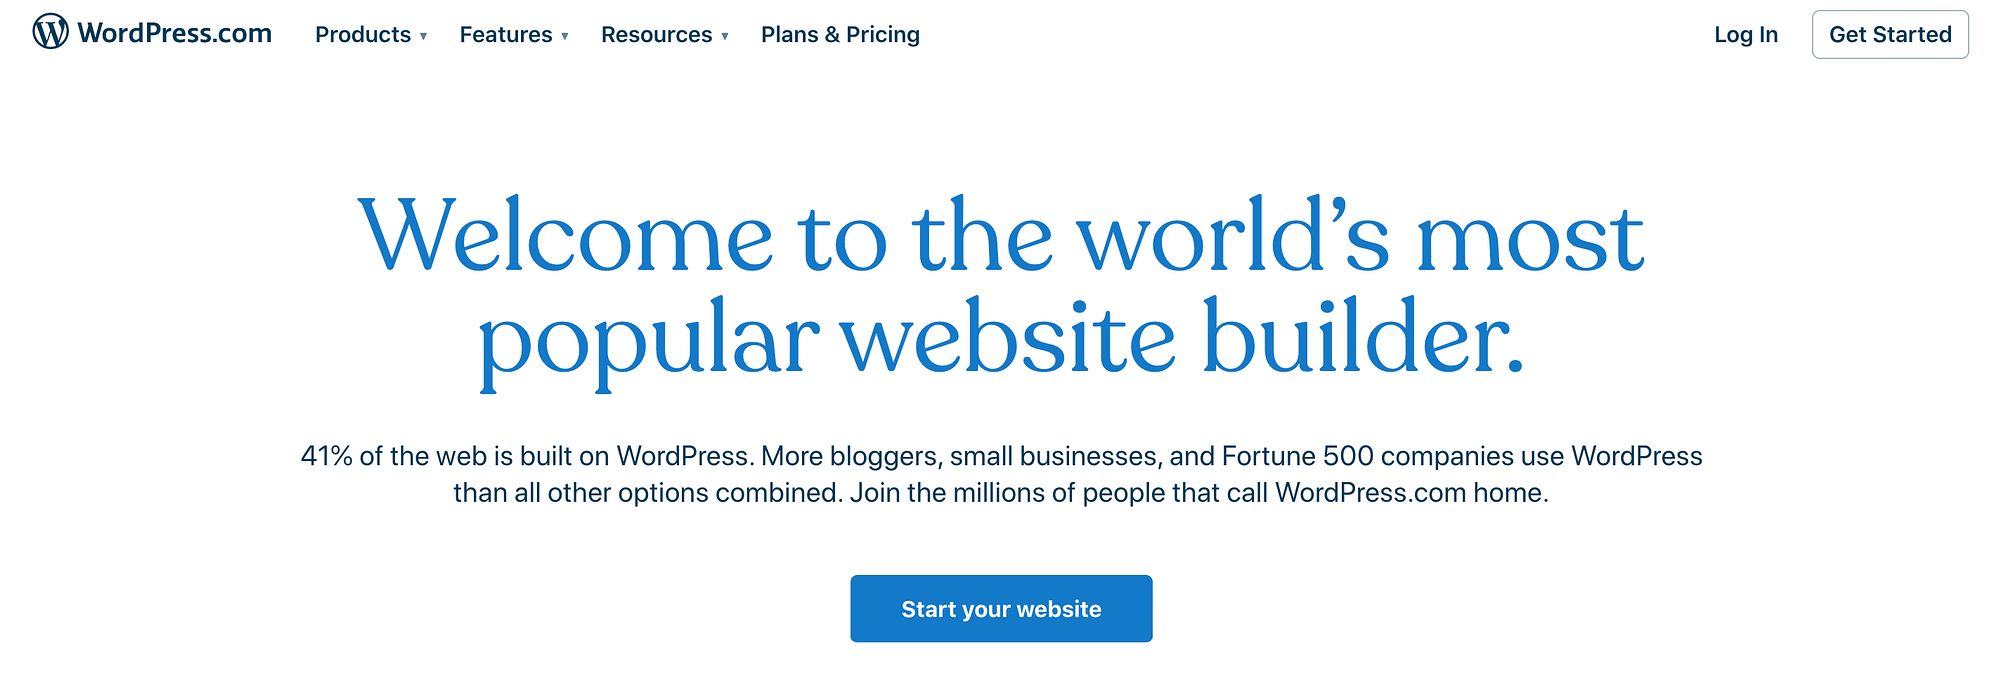 WordPress.com網站生成器。